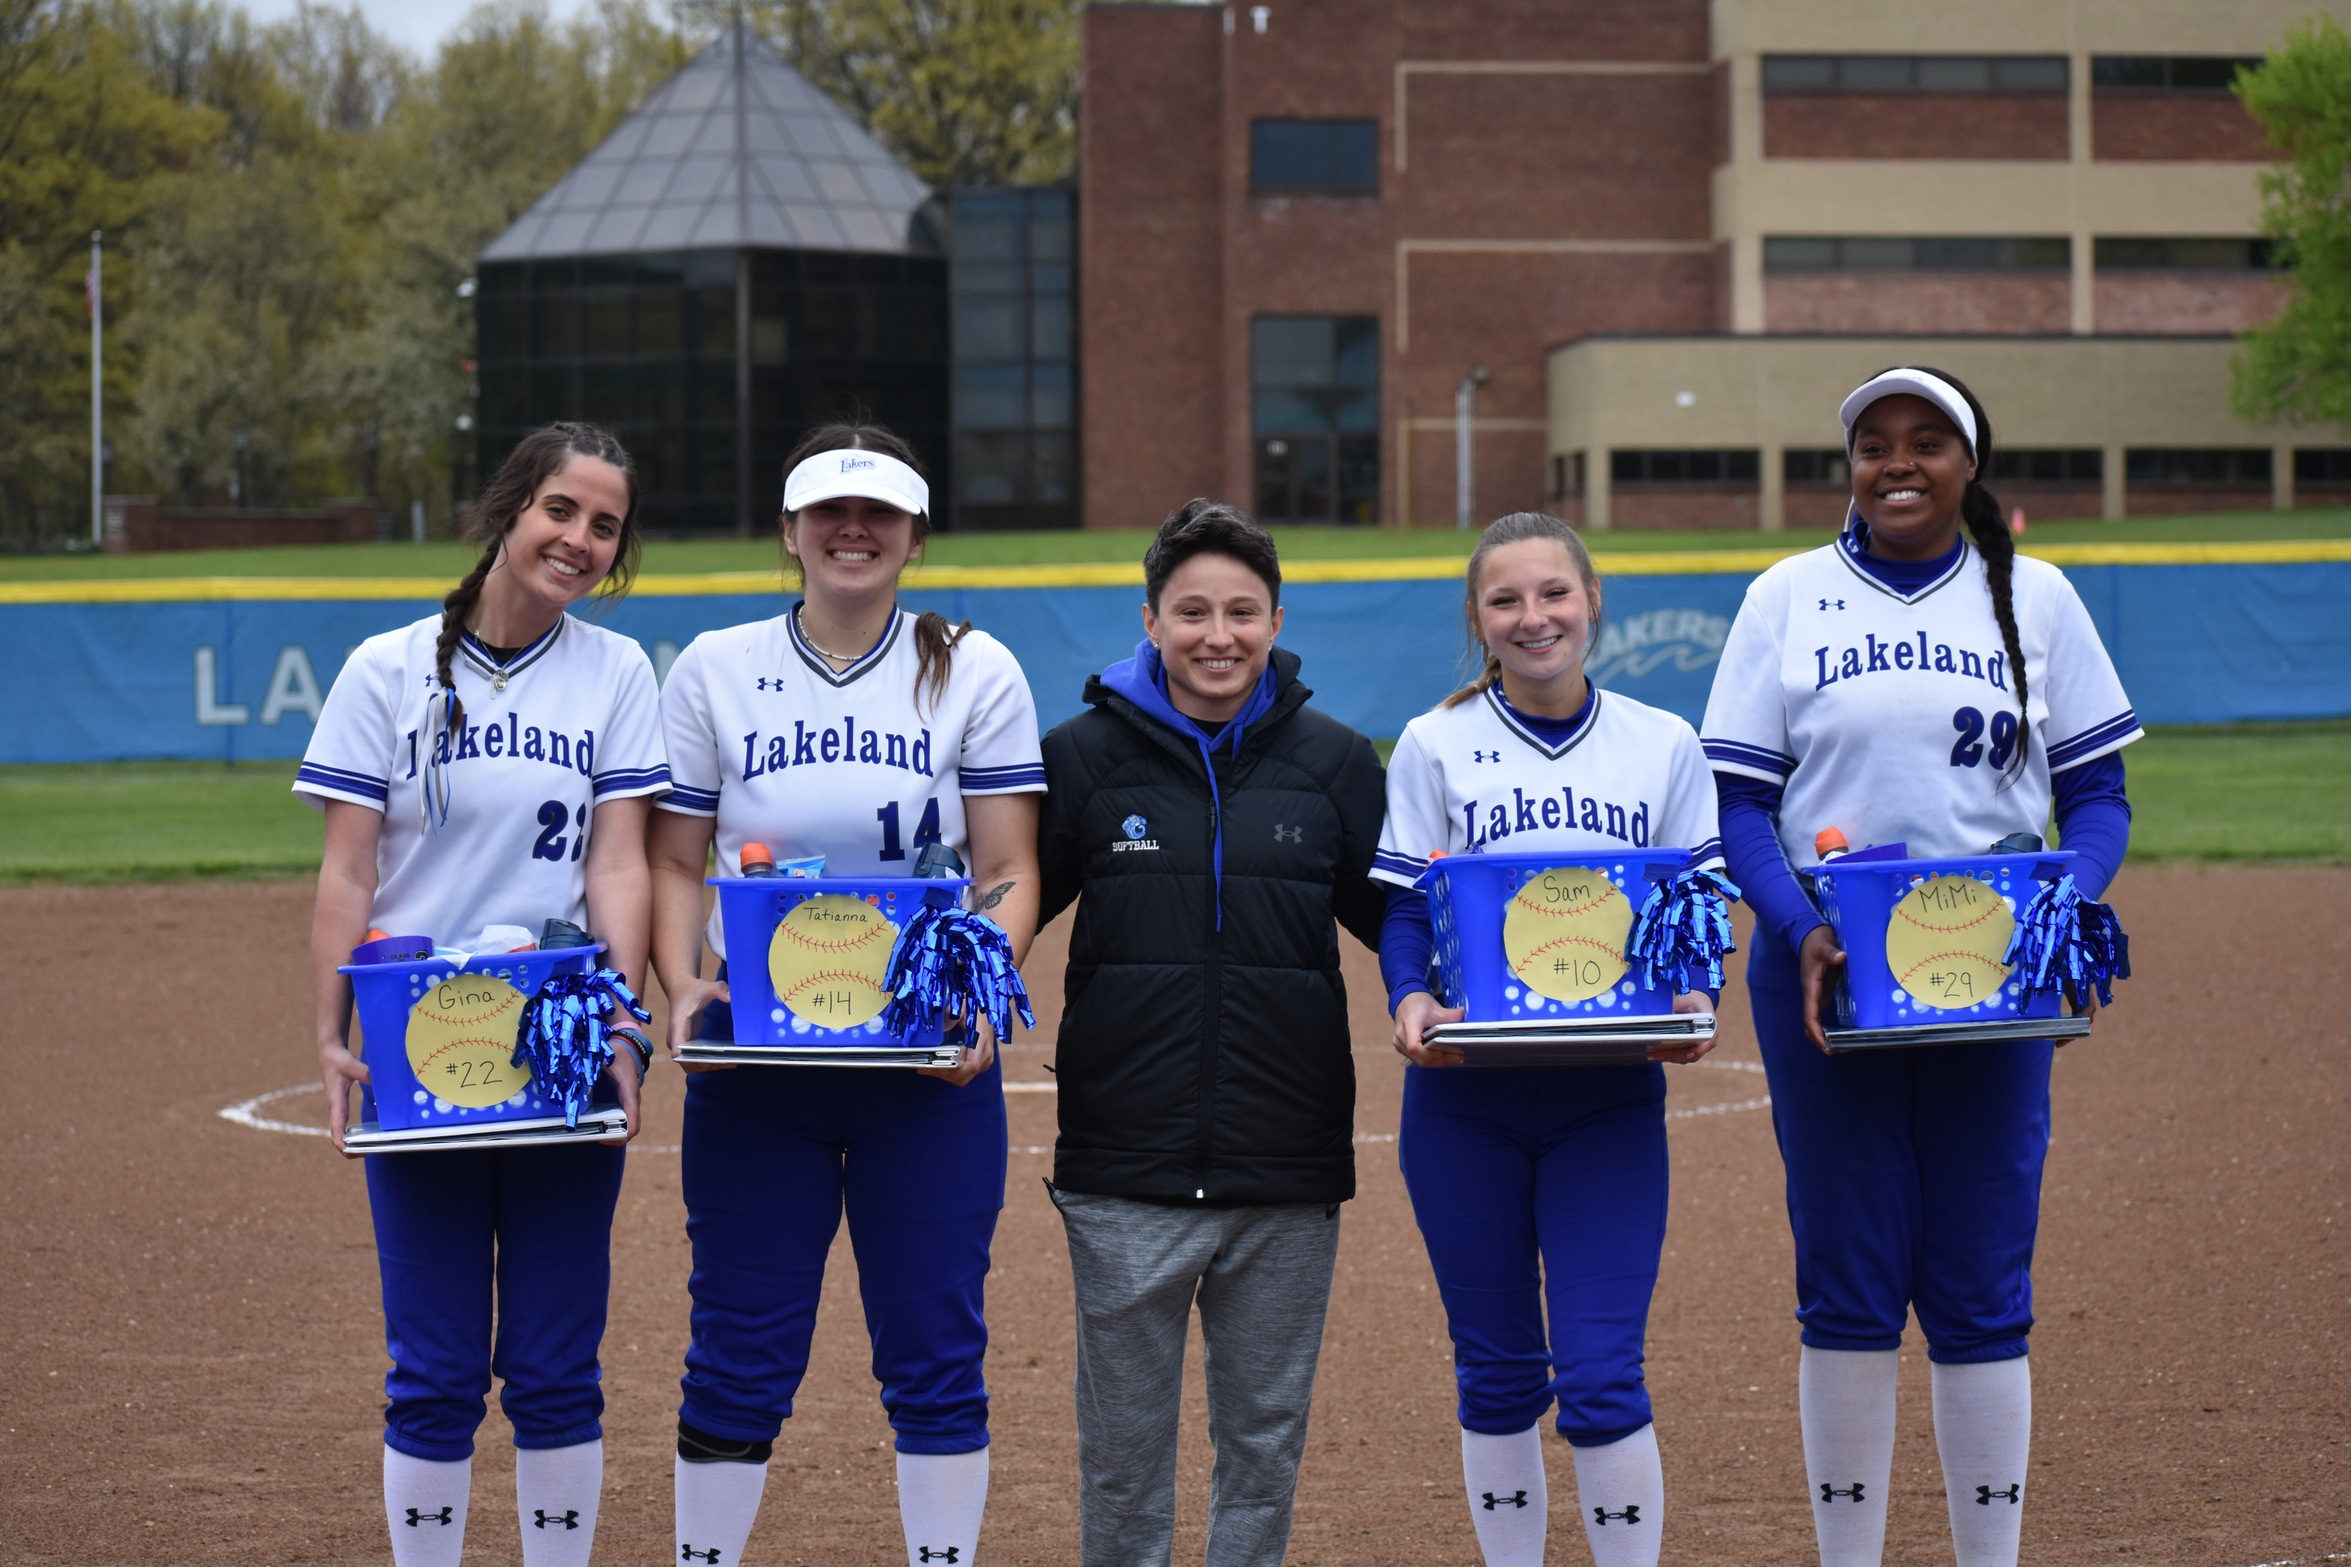 Lakeland sophomore players Gina Grandini, Tatianna Matuz, Coach Jordan Kramer, Samantha Toke, and Micaha Marbury (left to right)